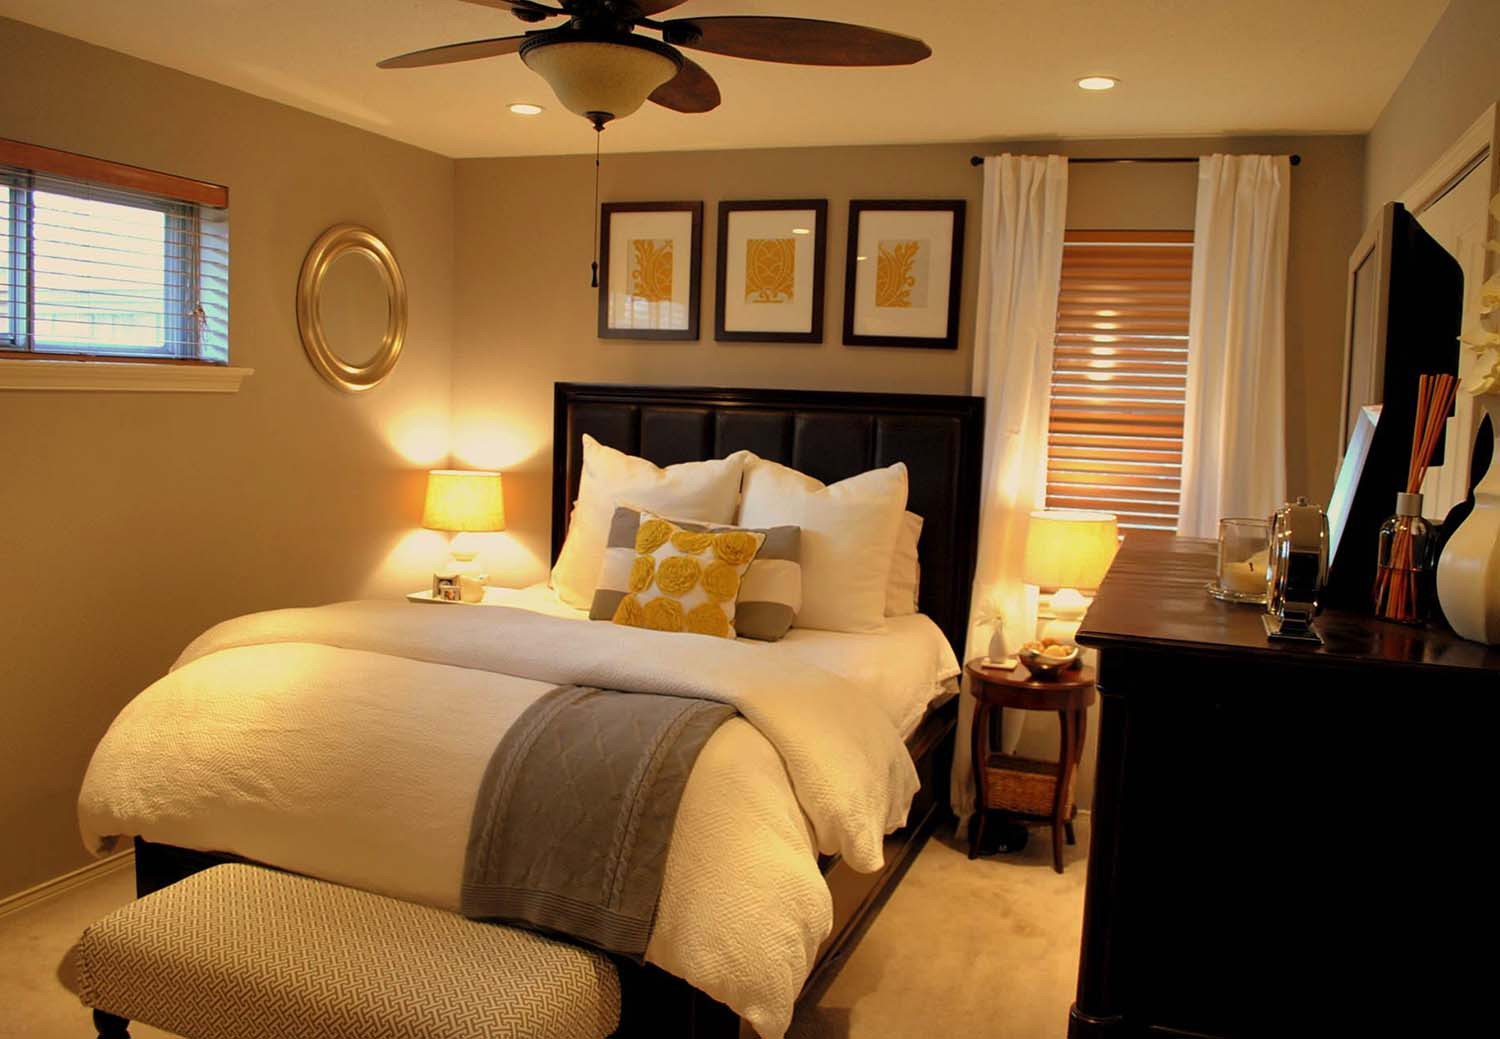 Master Bedroom Furniture Ideas
 30 Small yet amazingly cozy master bedroom retreats